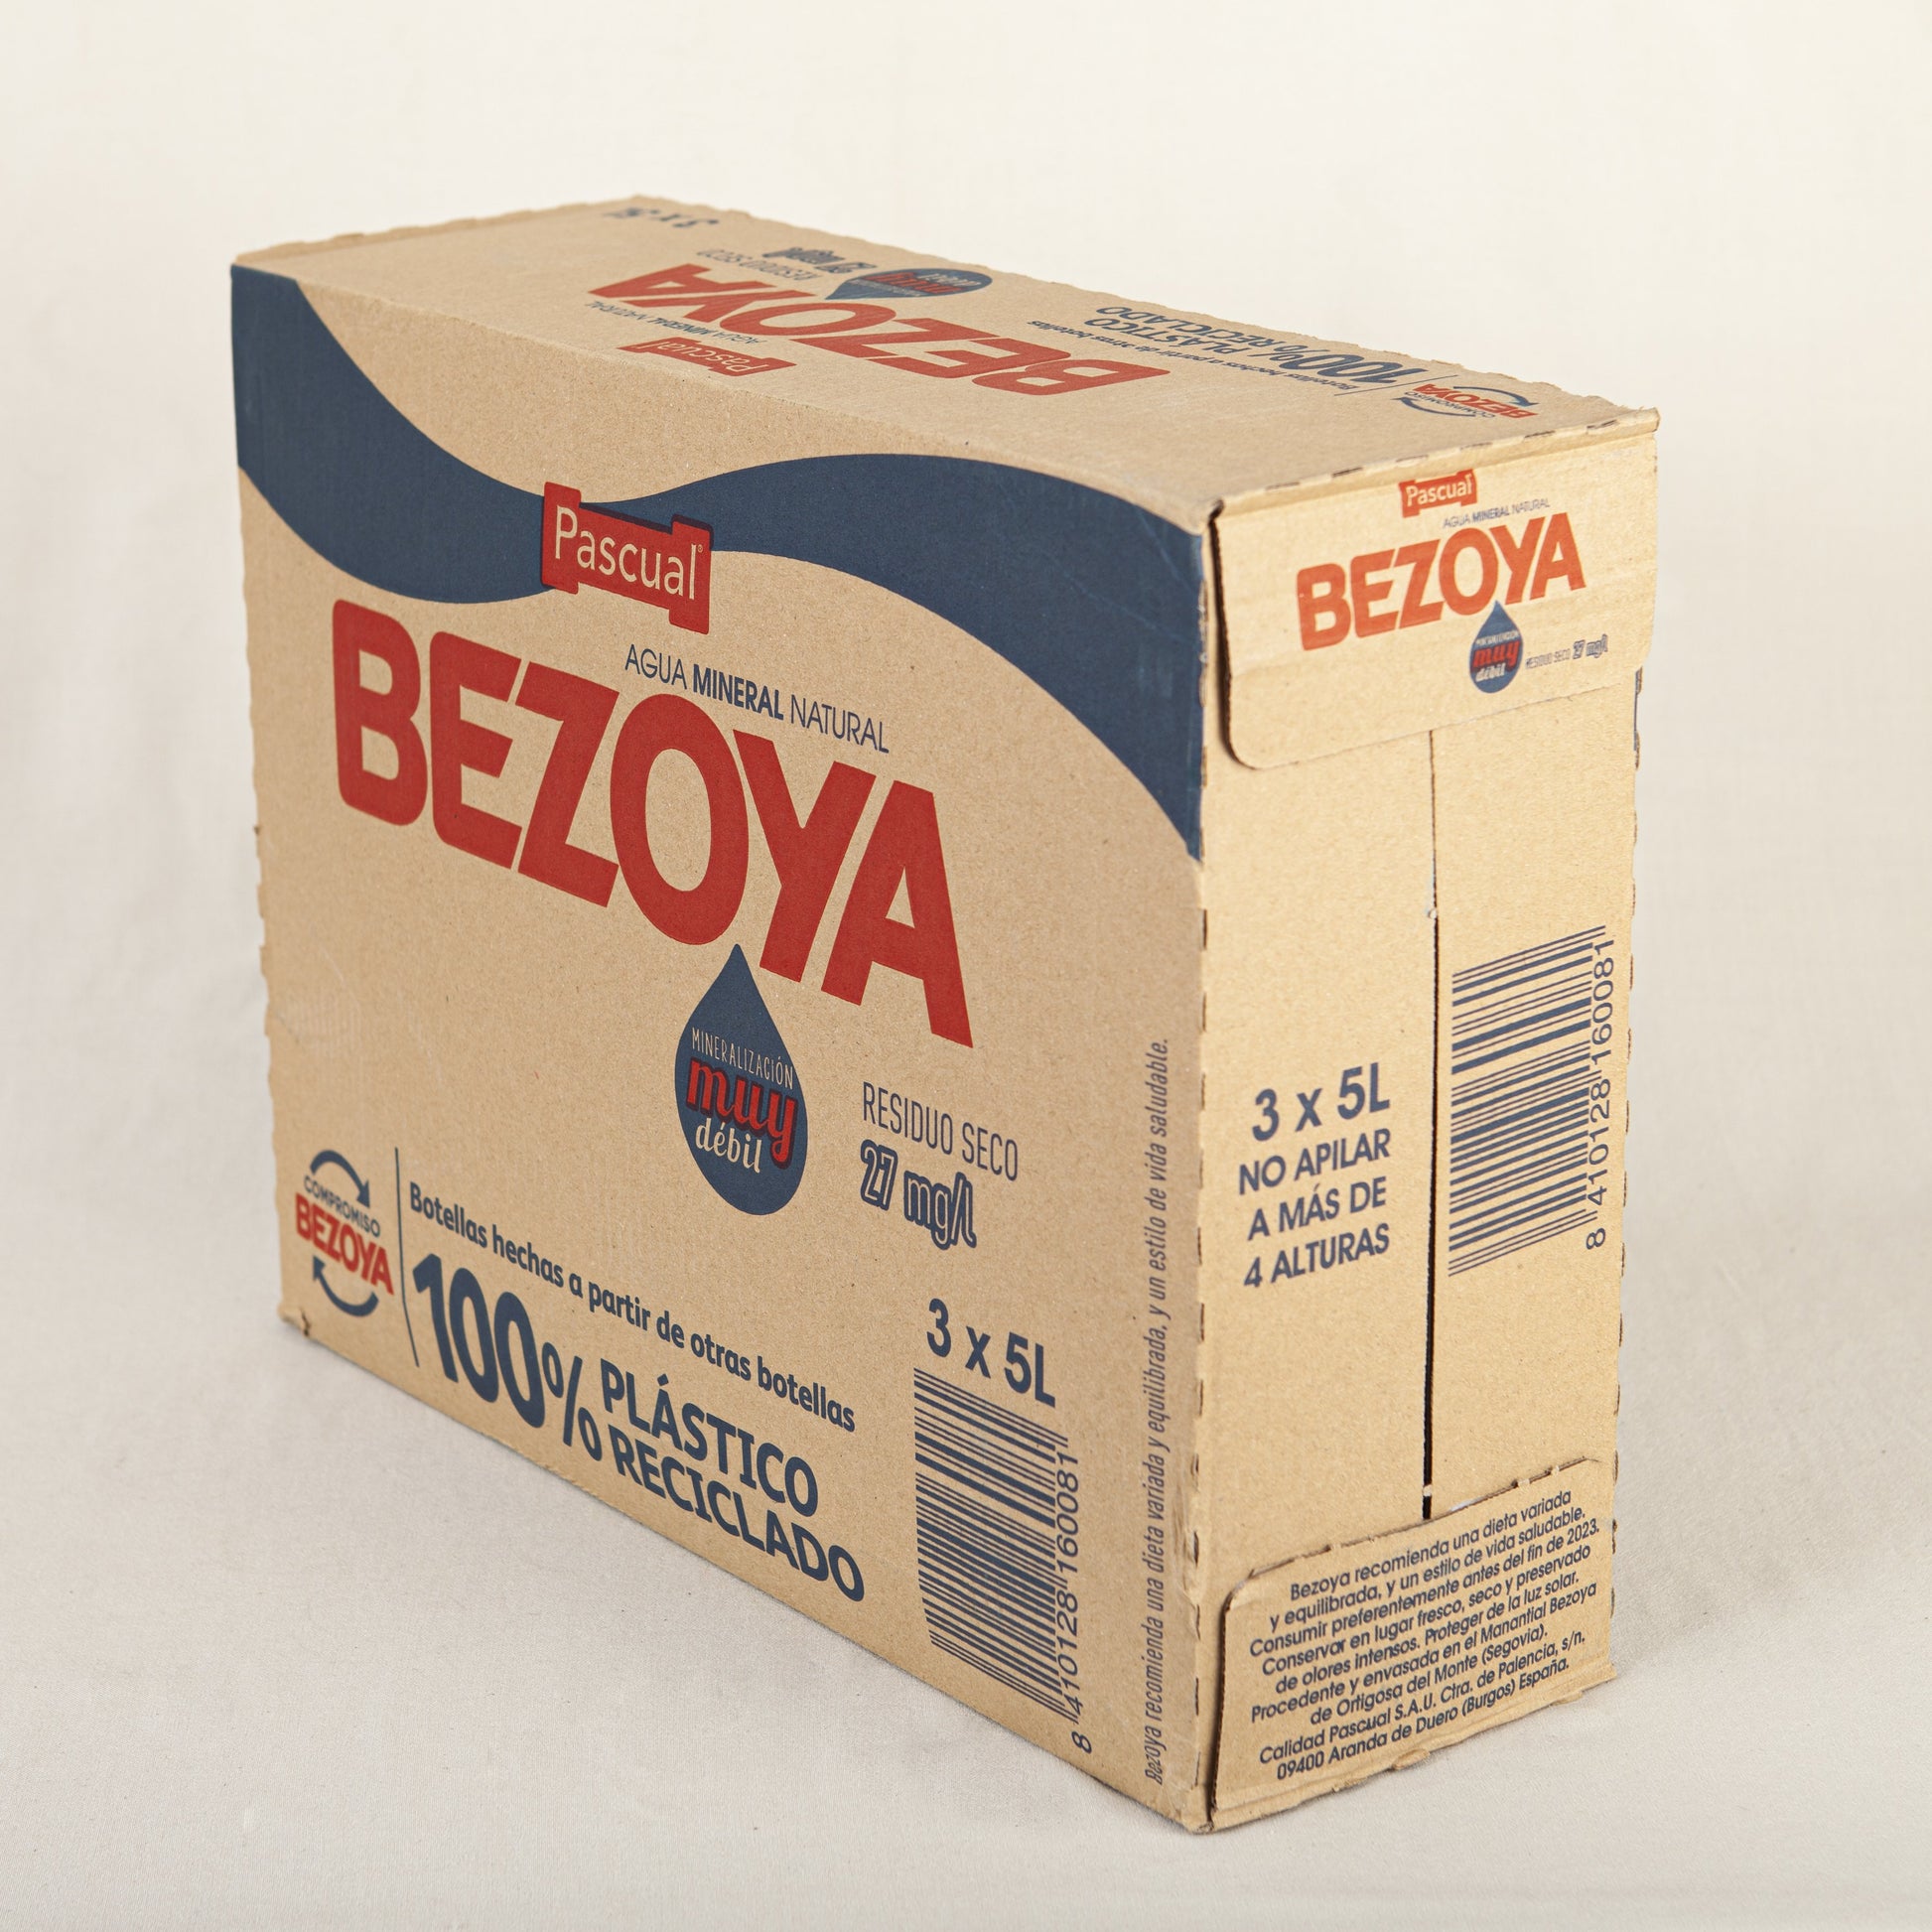 Bezoya Agua mineral natural bezoya Caja 8 lt